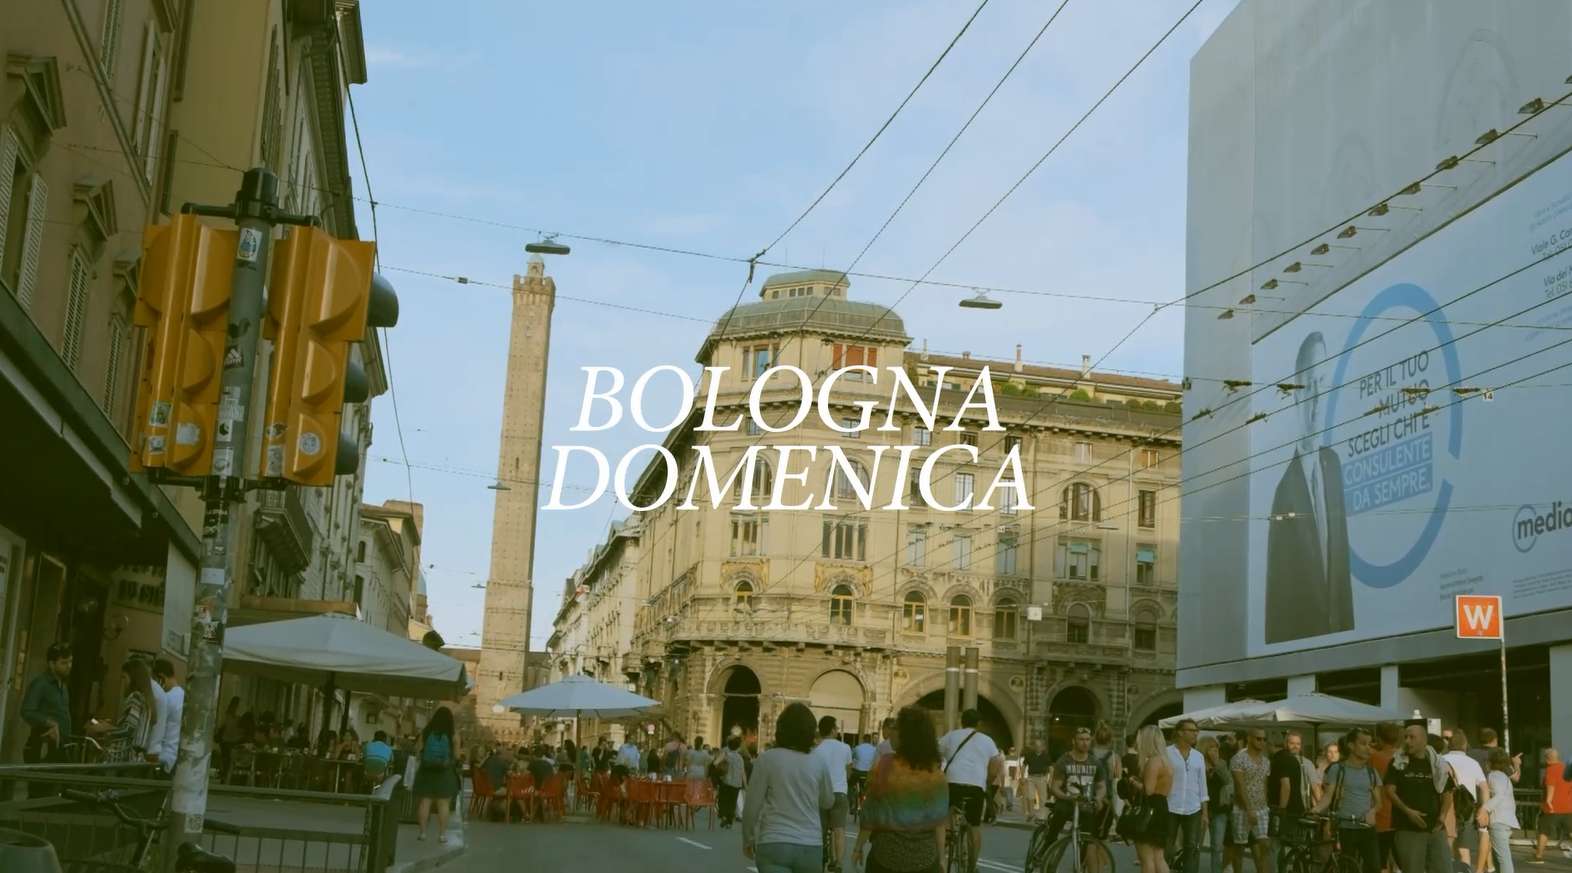 博洛尼亚的星期天 - Bologna domenica I